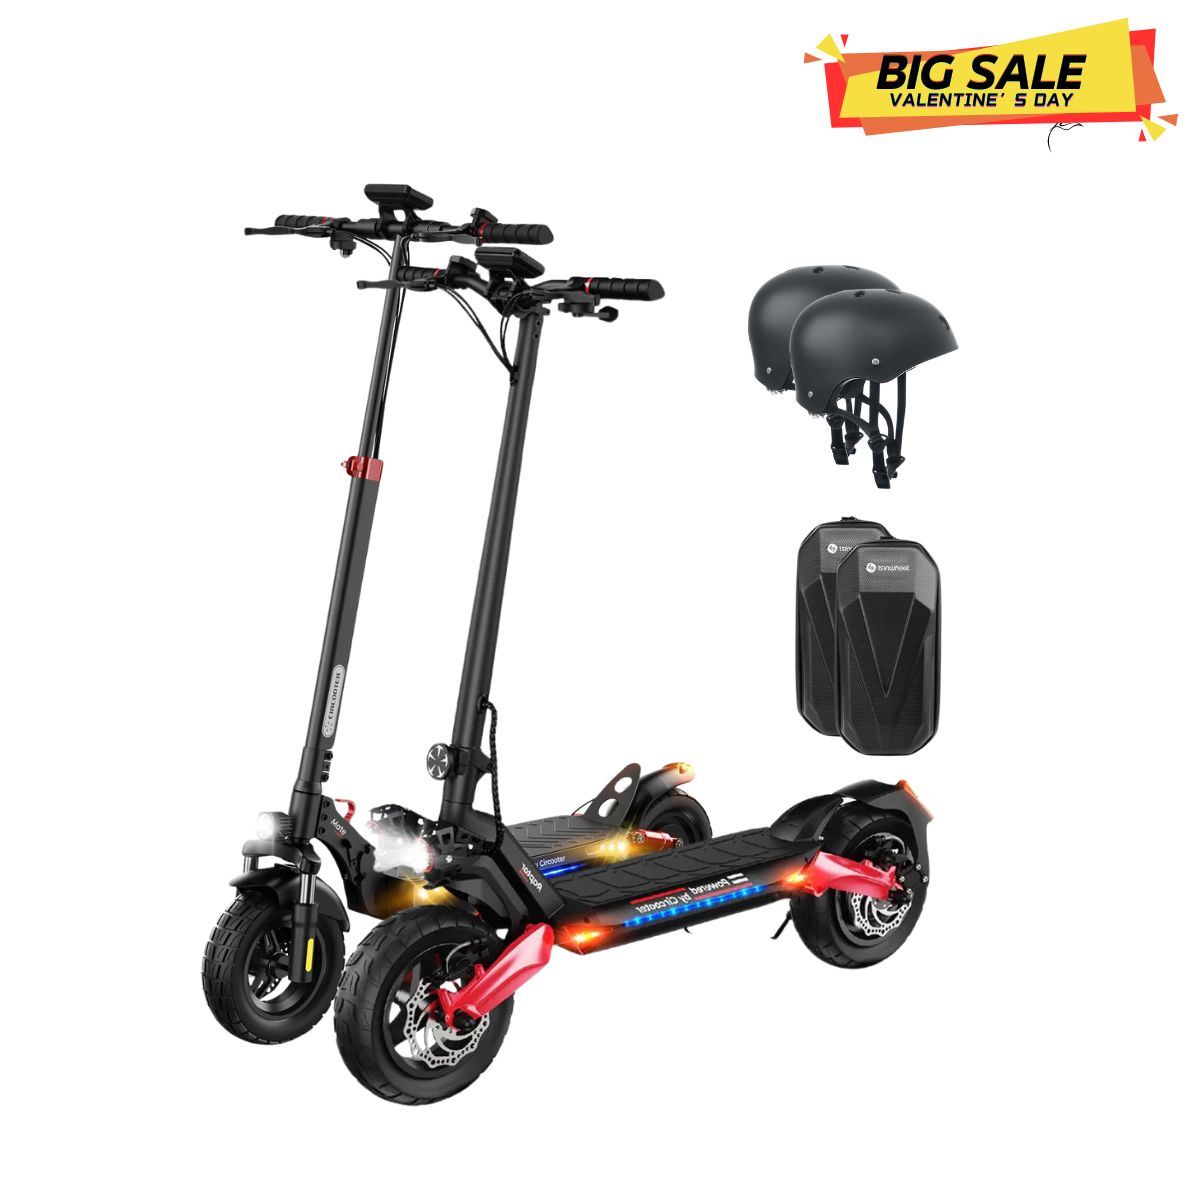 isinwheel Electric Scooter Bundle Sale